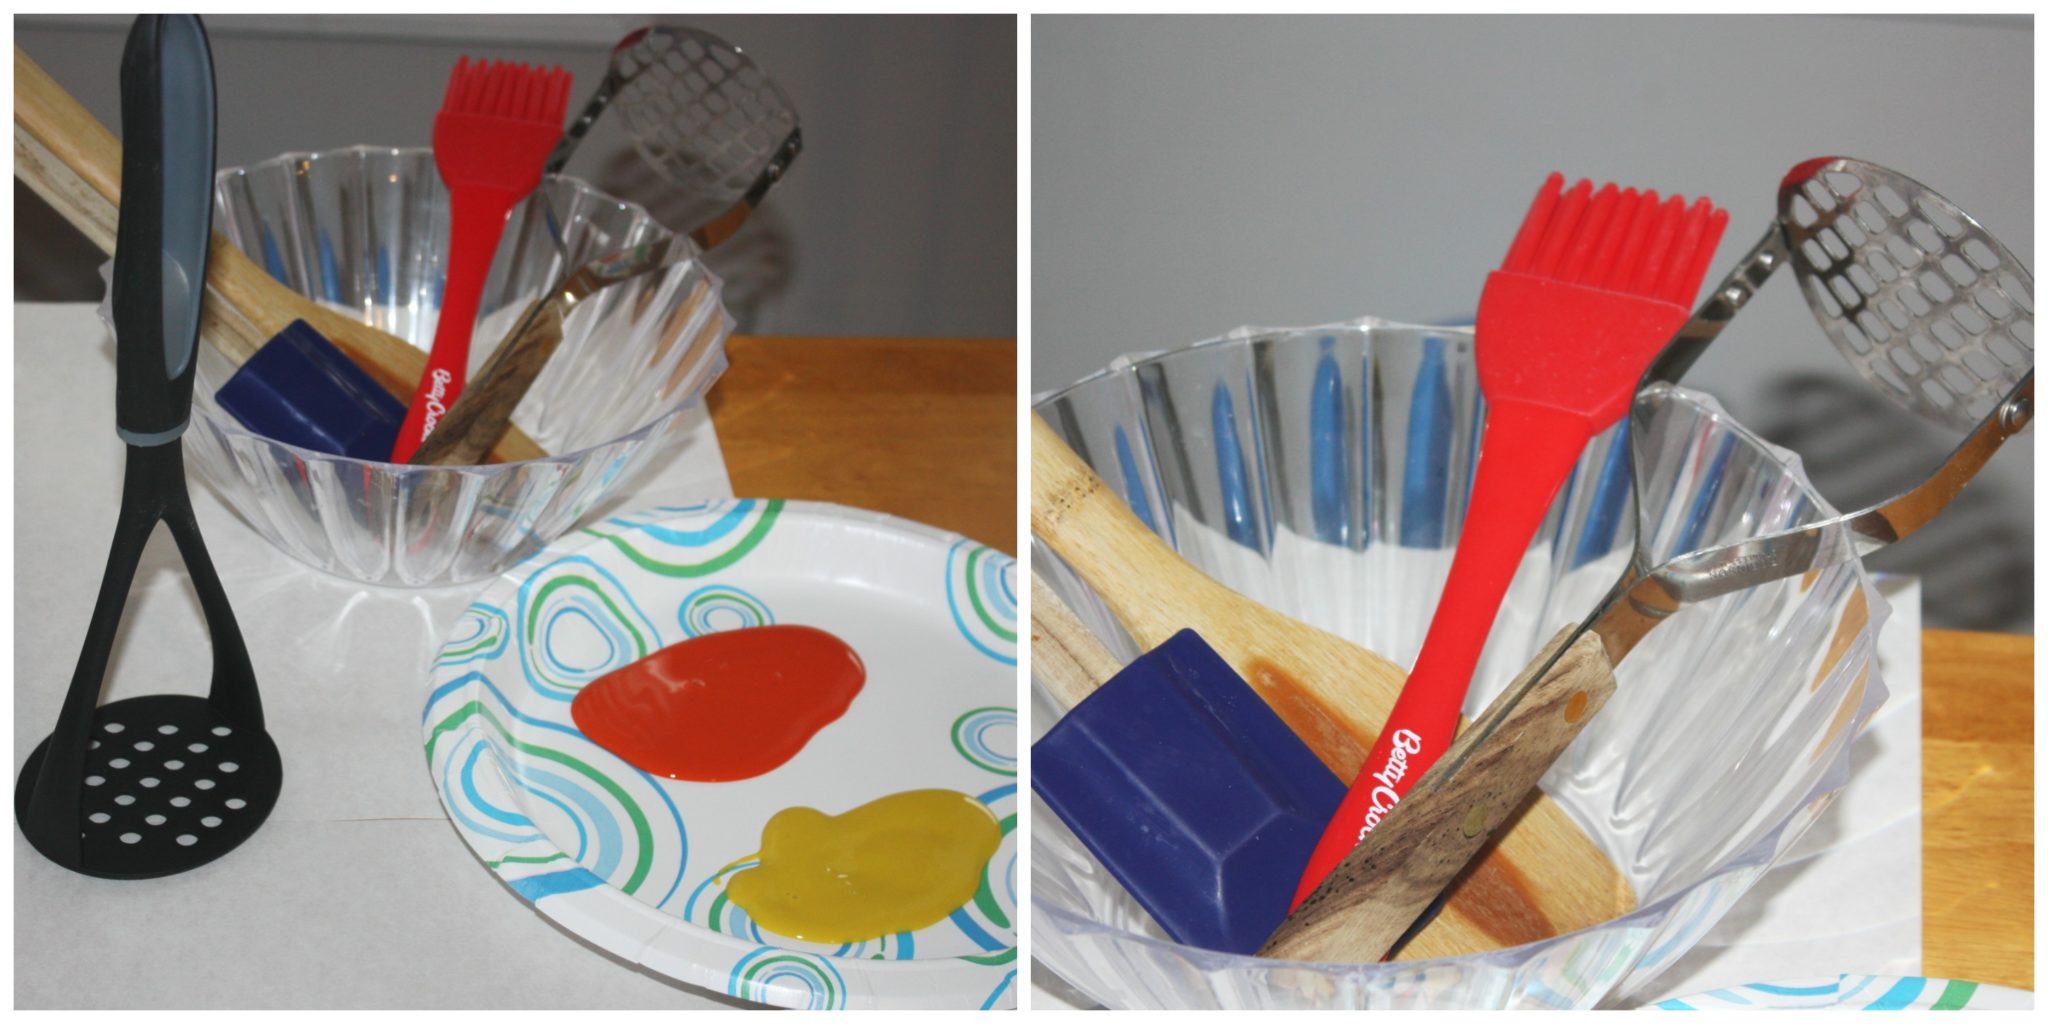 Painted kitchen utensils